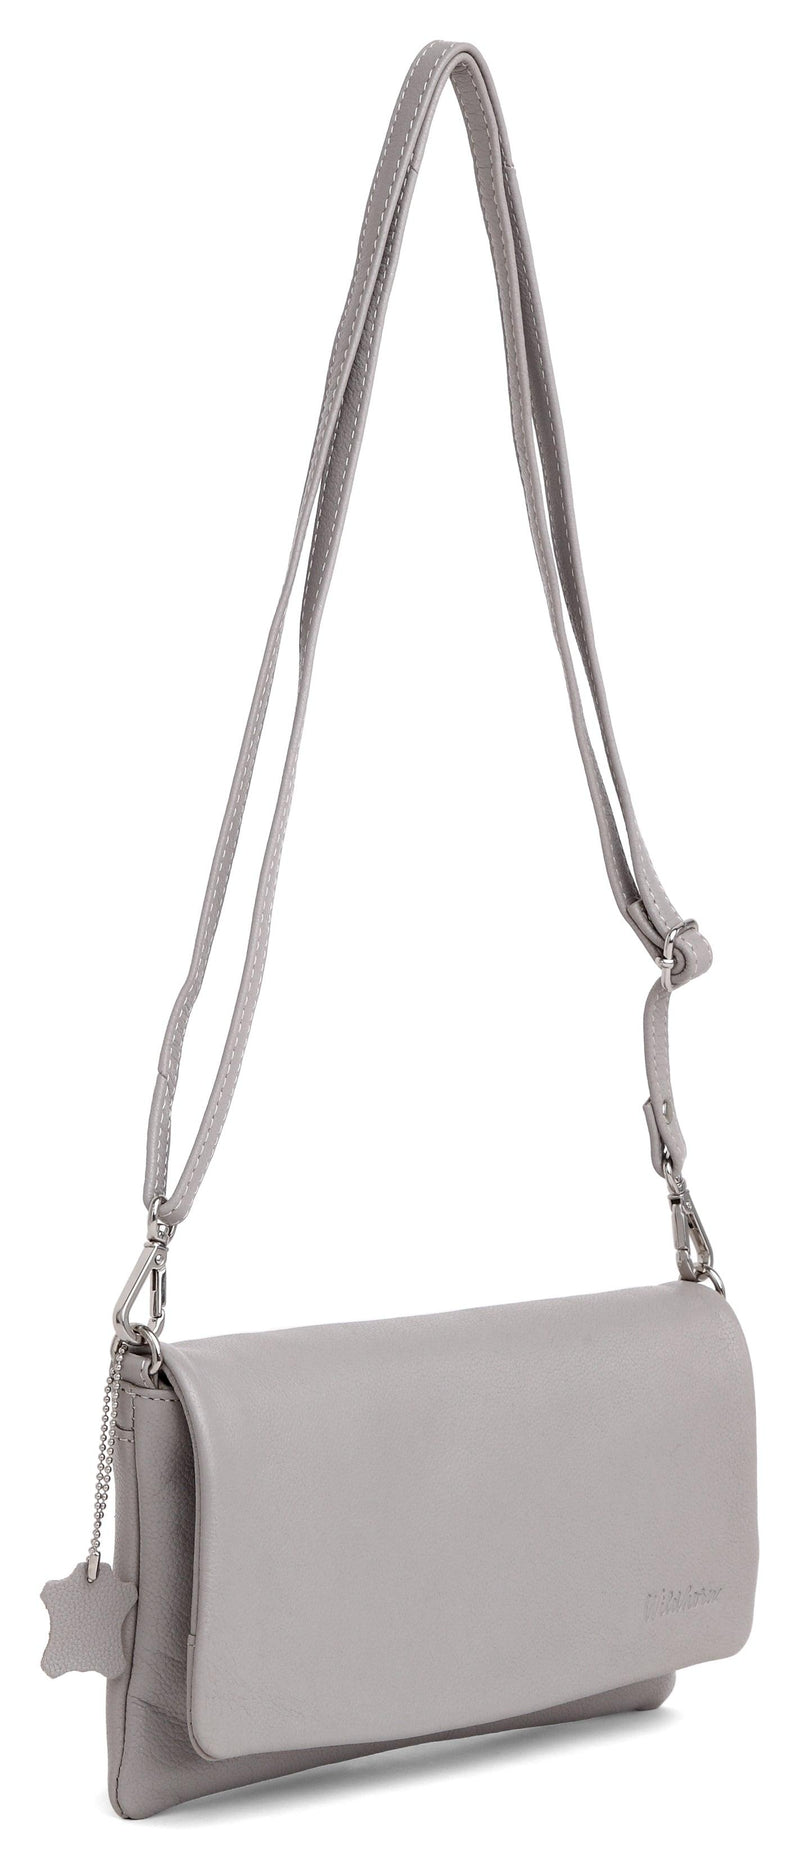 Shoulder-strap multi-bag - Beige - Ladies | H&M IN